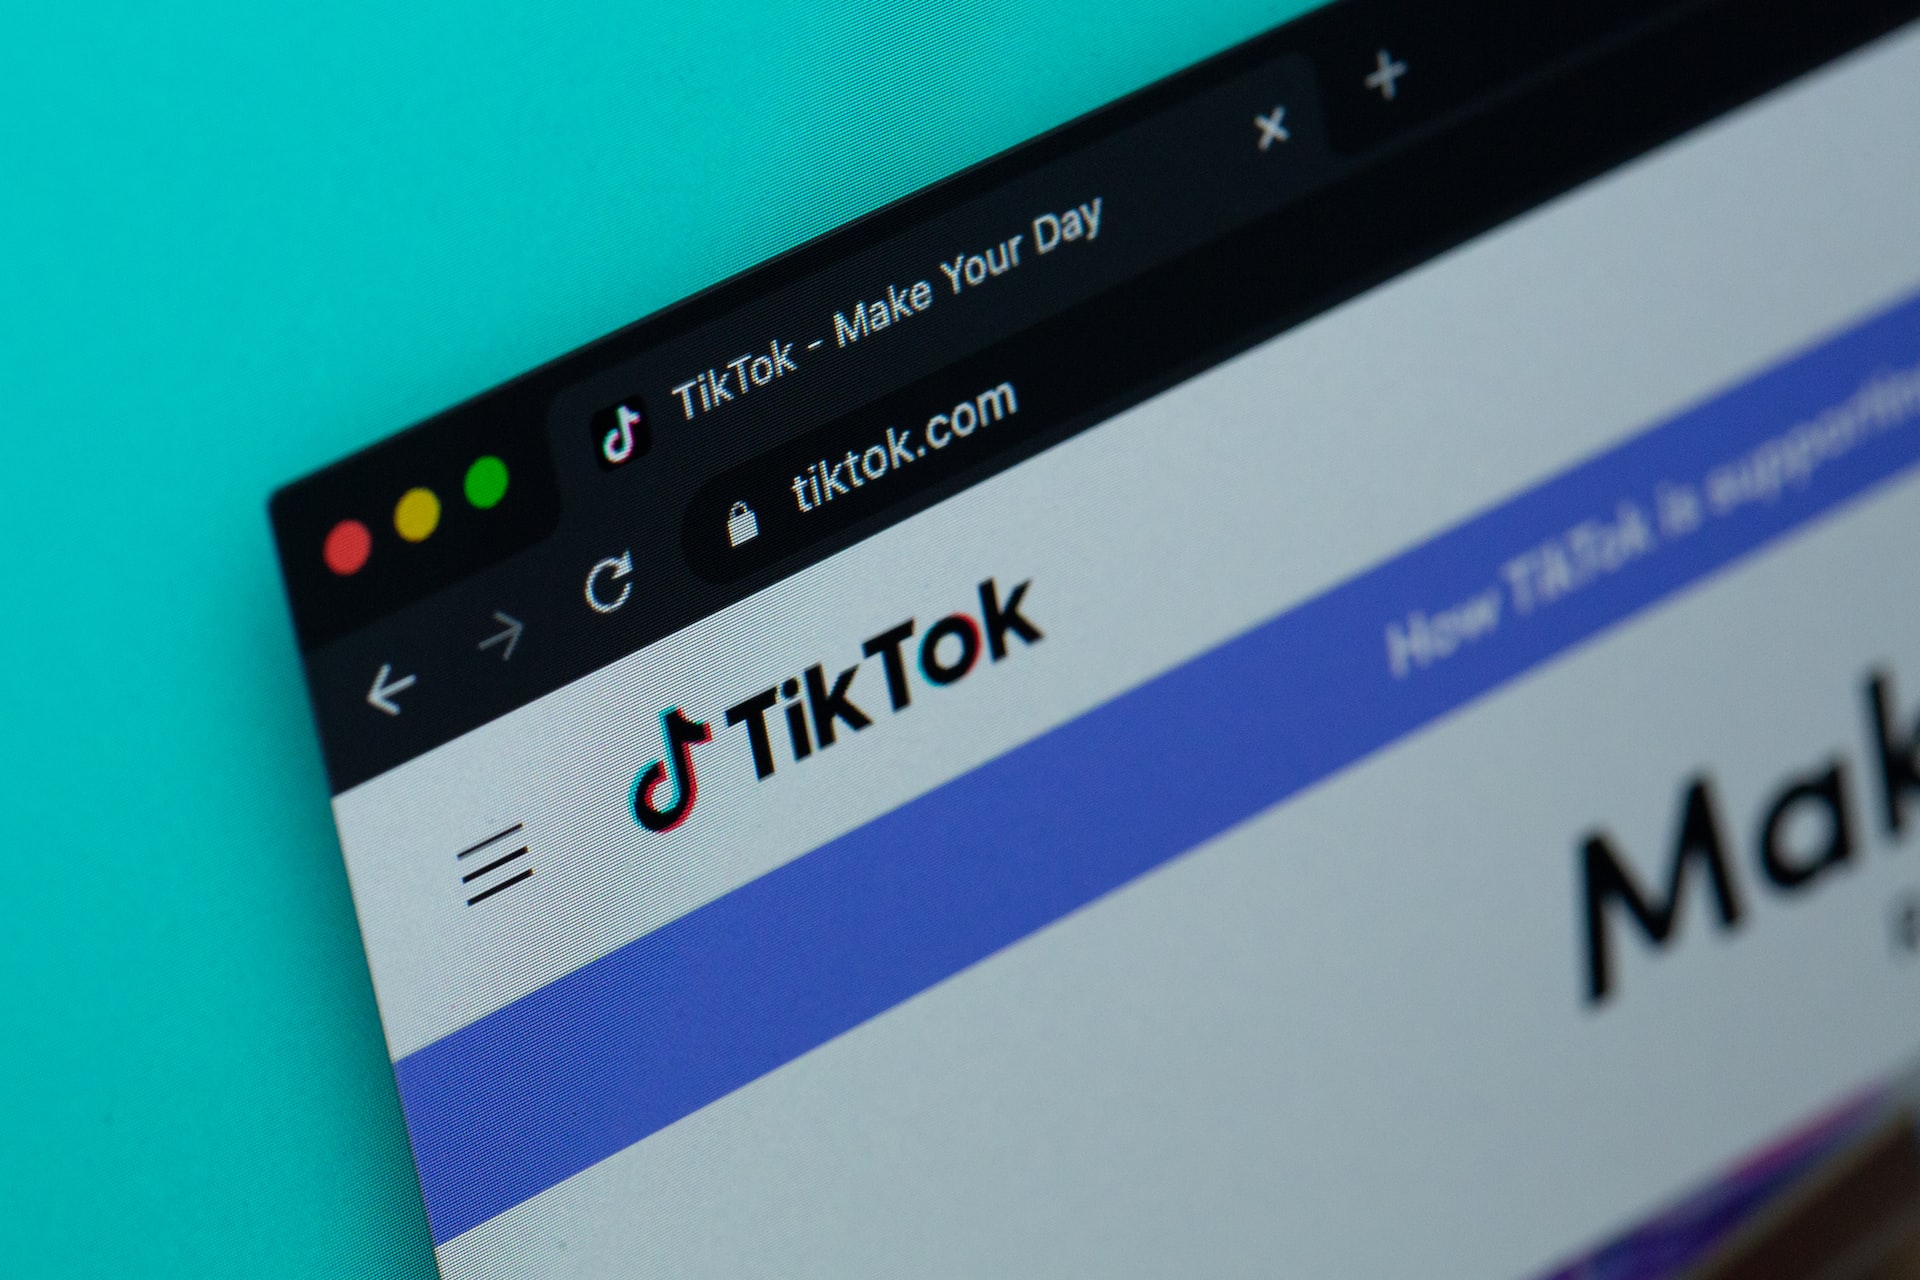 India and Taiwan have blocked any access to TikTok.